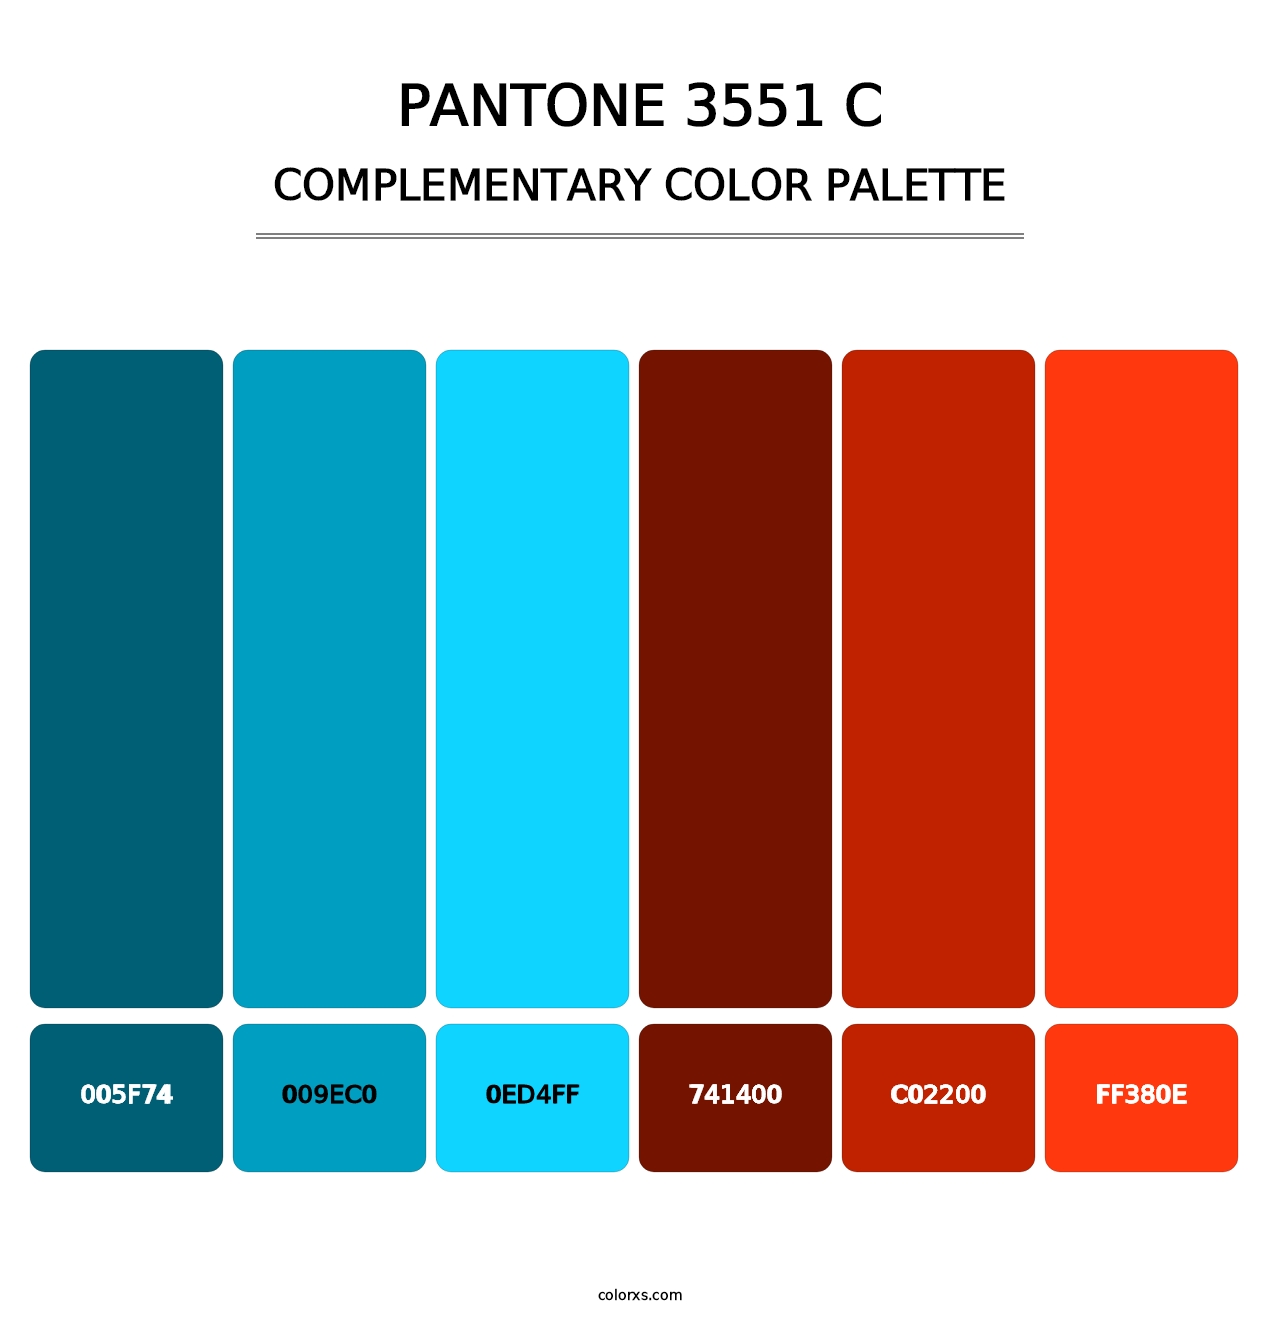 PANTONE 3551 C - Complementary Color Palette